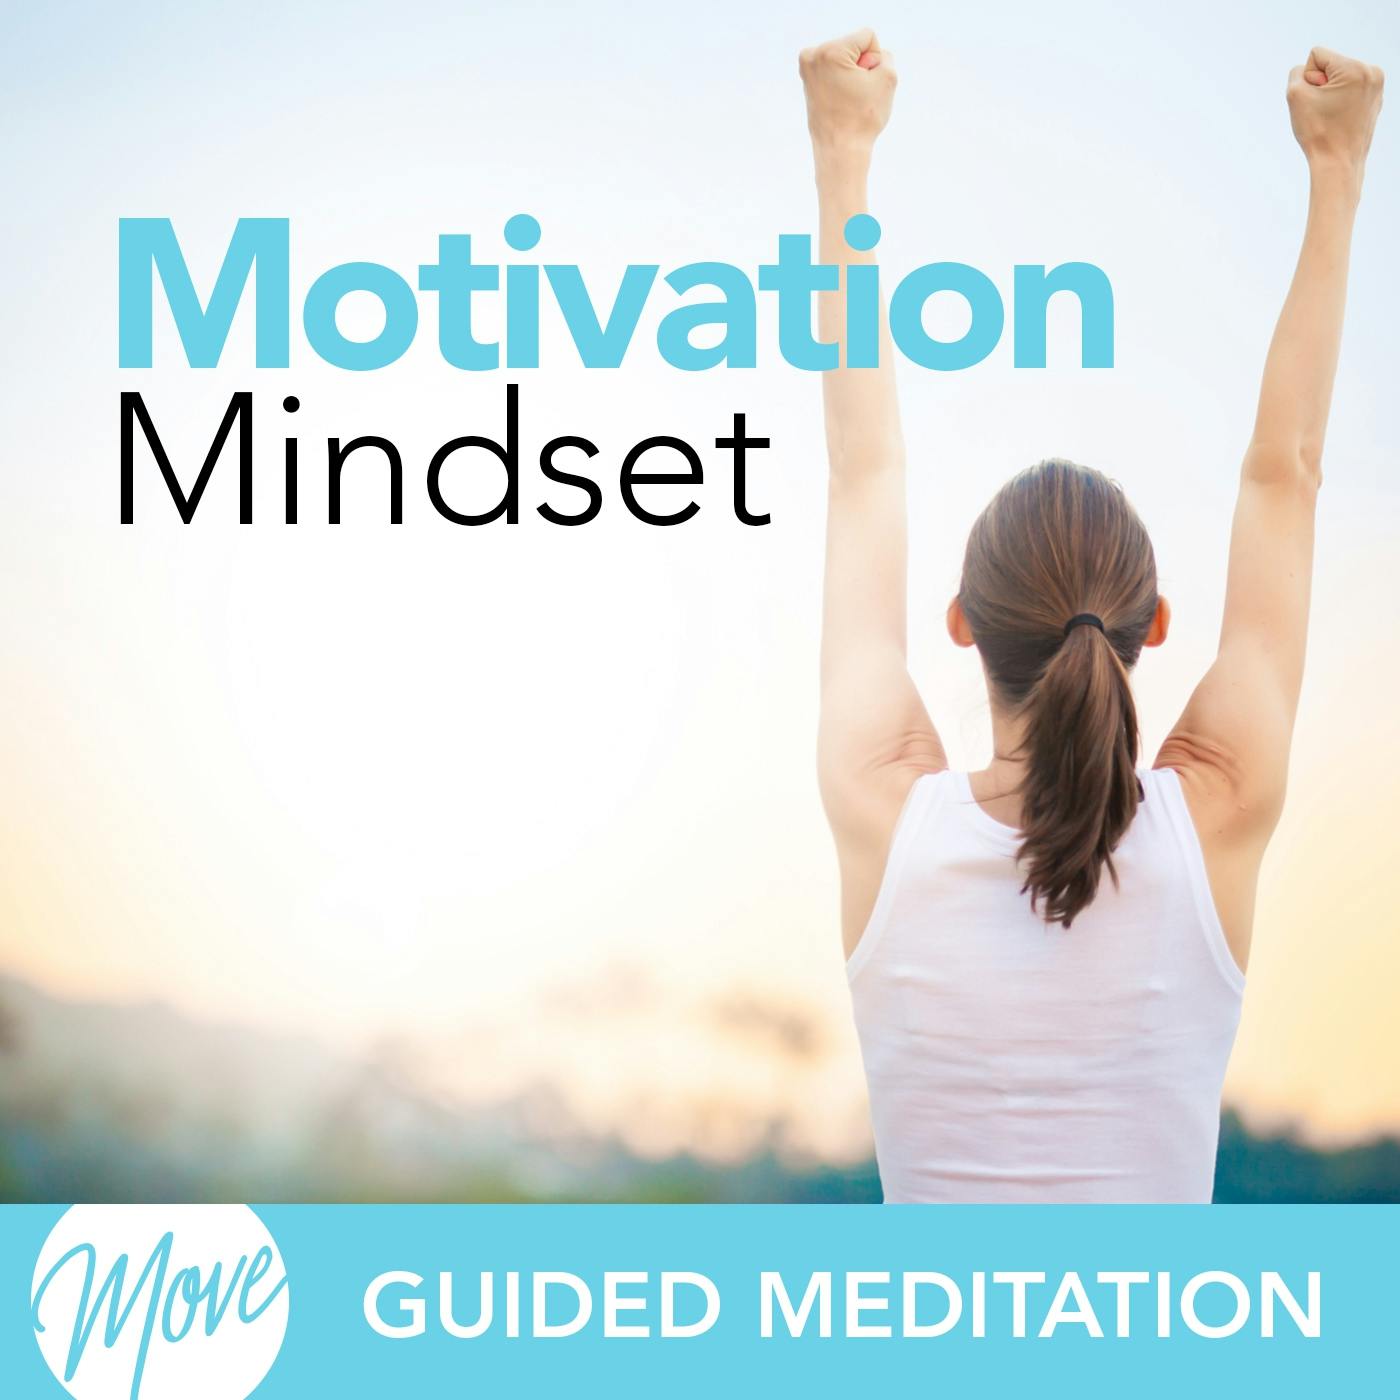 Motivation Mindset - Amy Applebaum